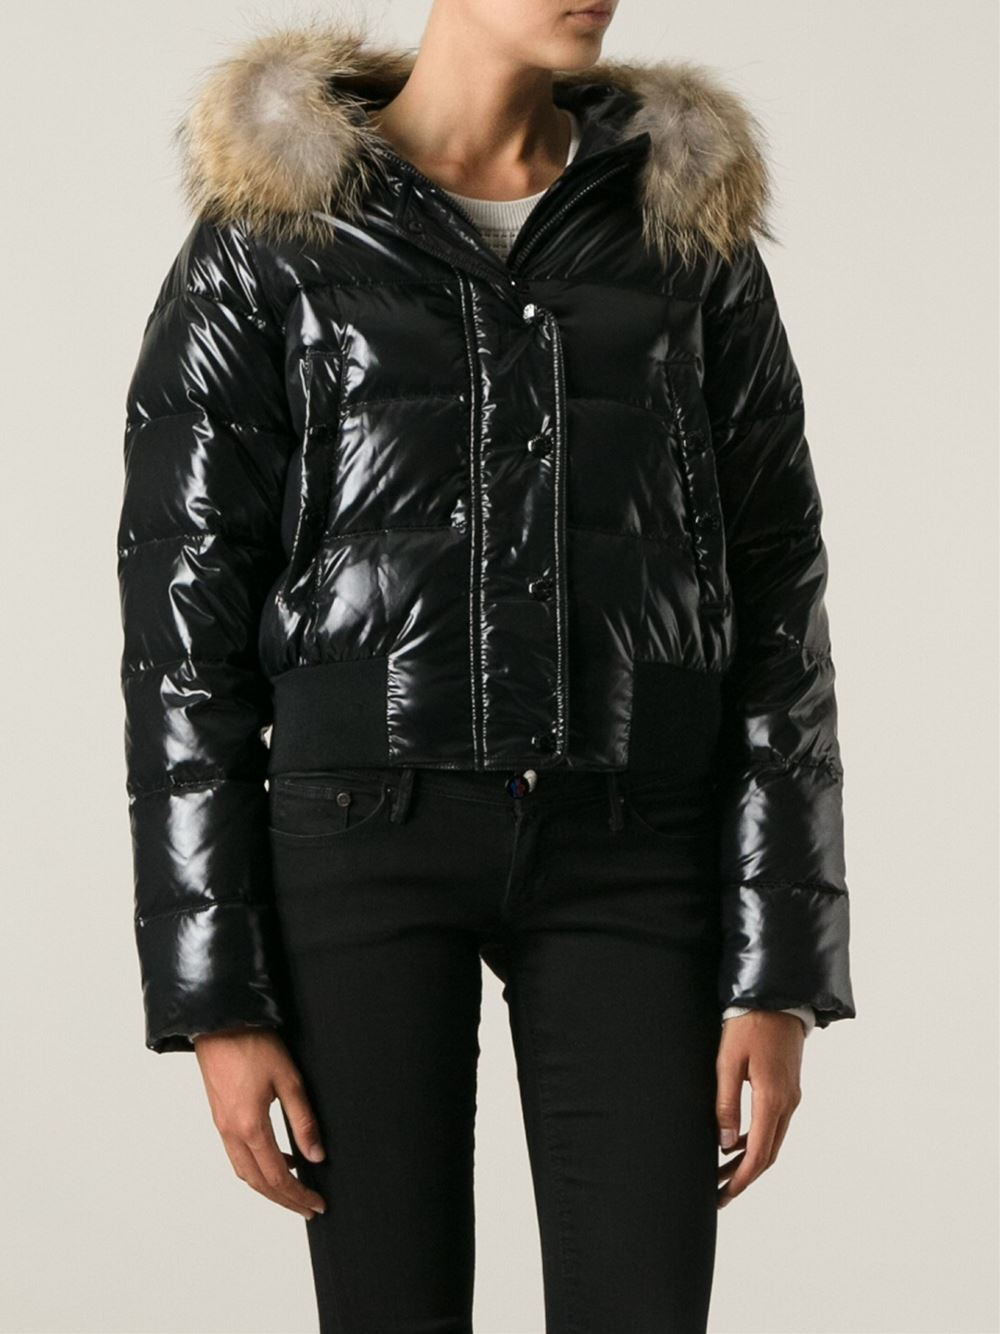 moncler alpine black jacket women